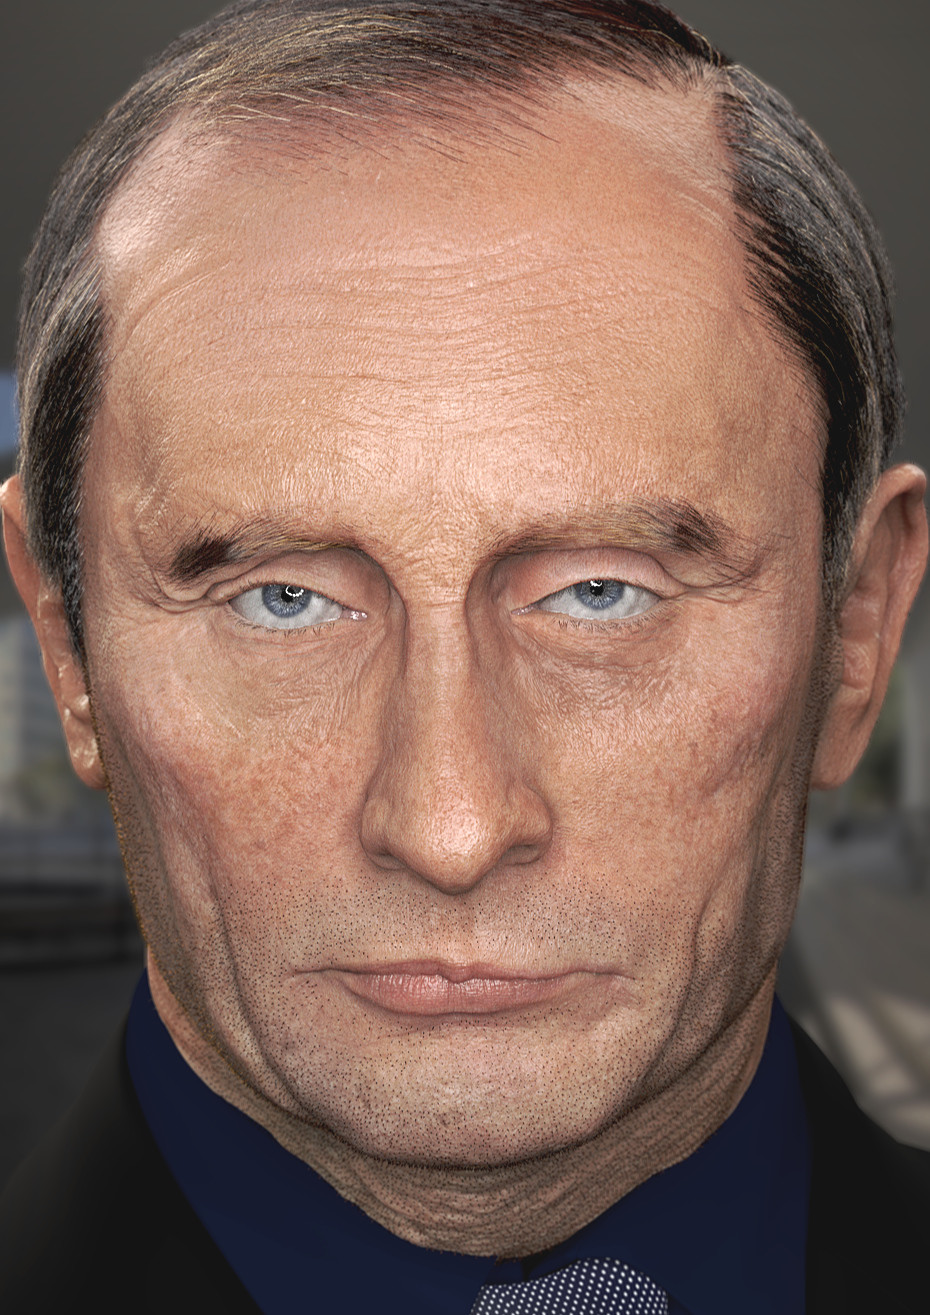 Vladimir Putin CGi Looking At Viewer Face Cropped Political Figure Celebrity Renju Bosco Blurry Back 930x1315